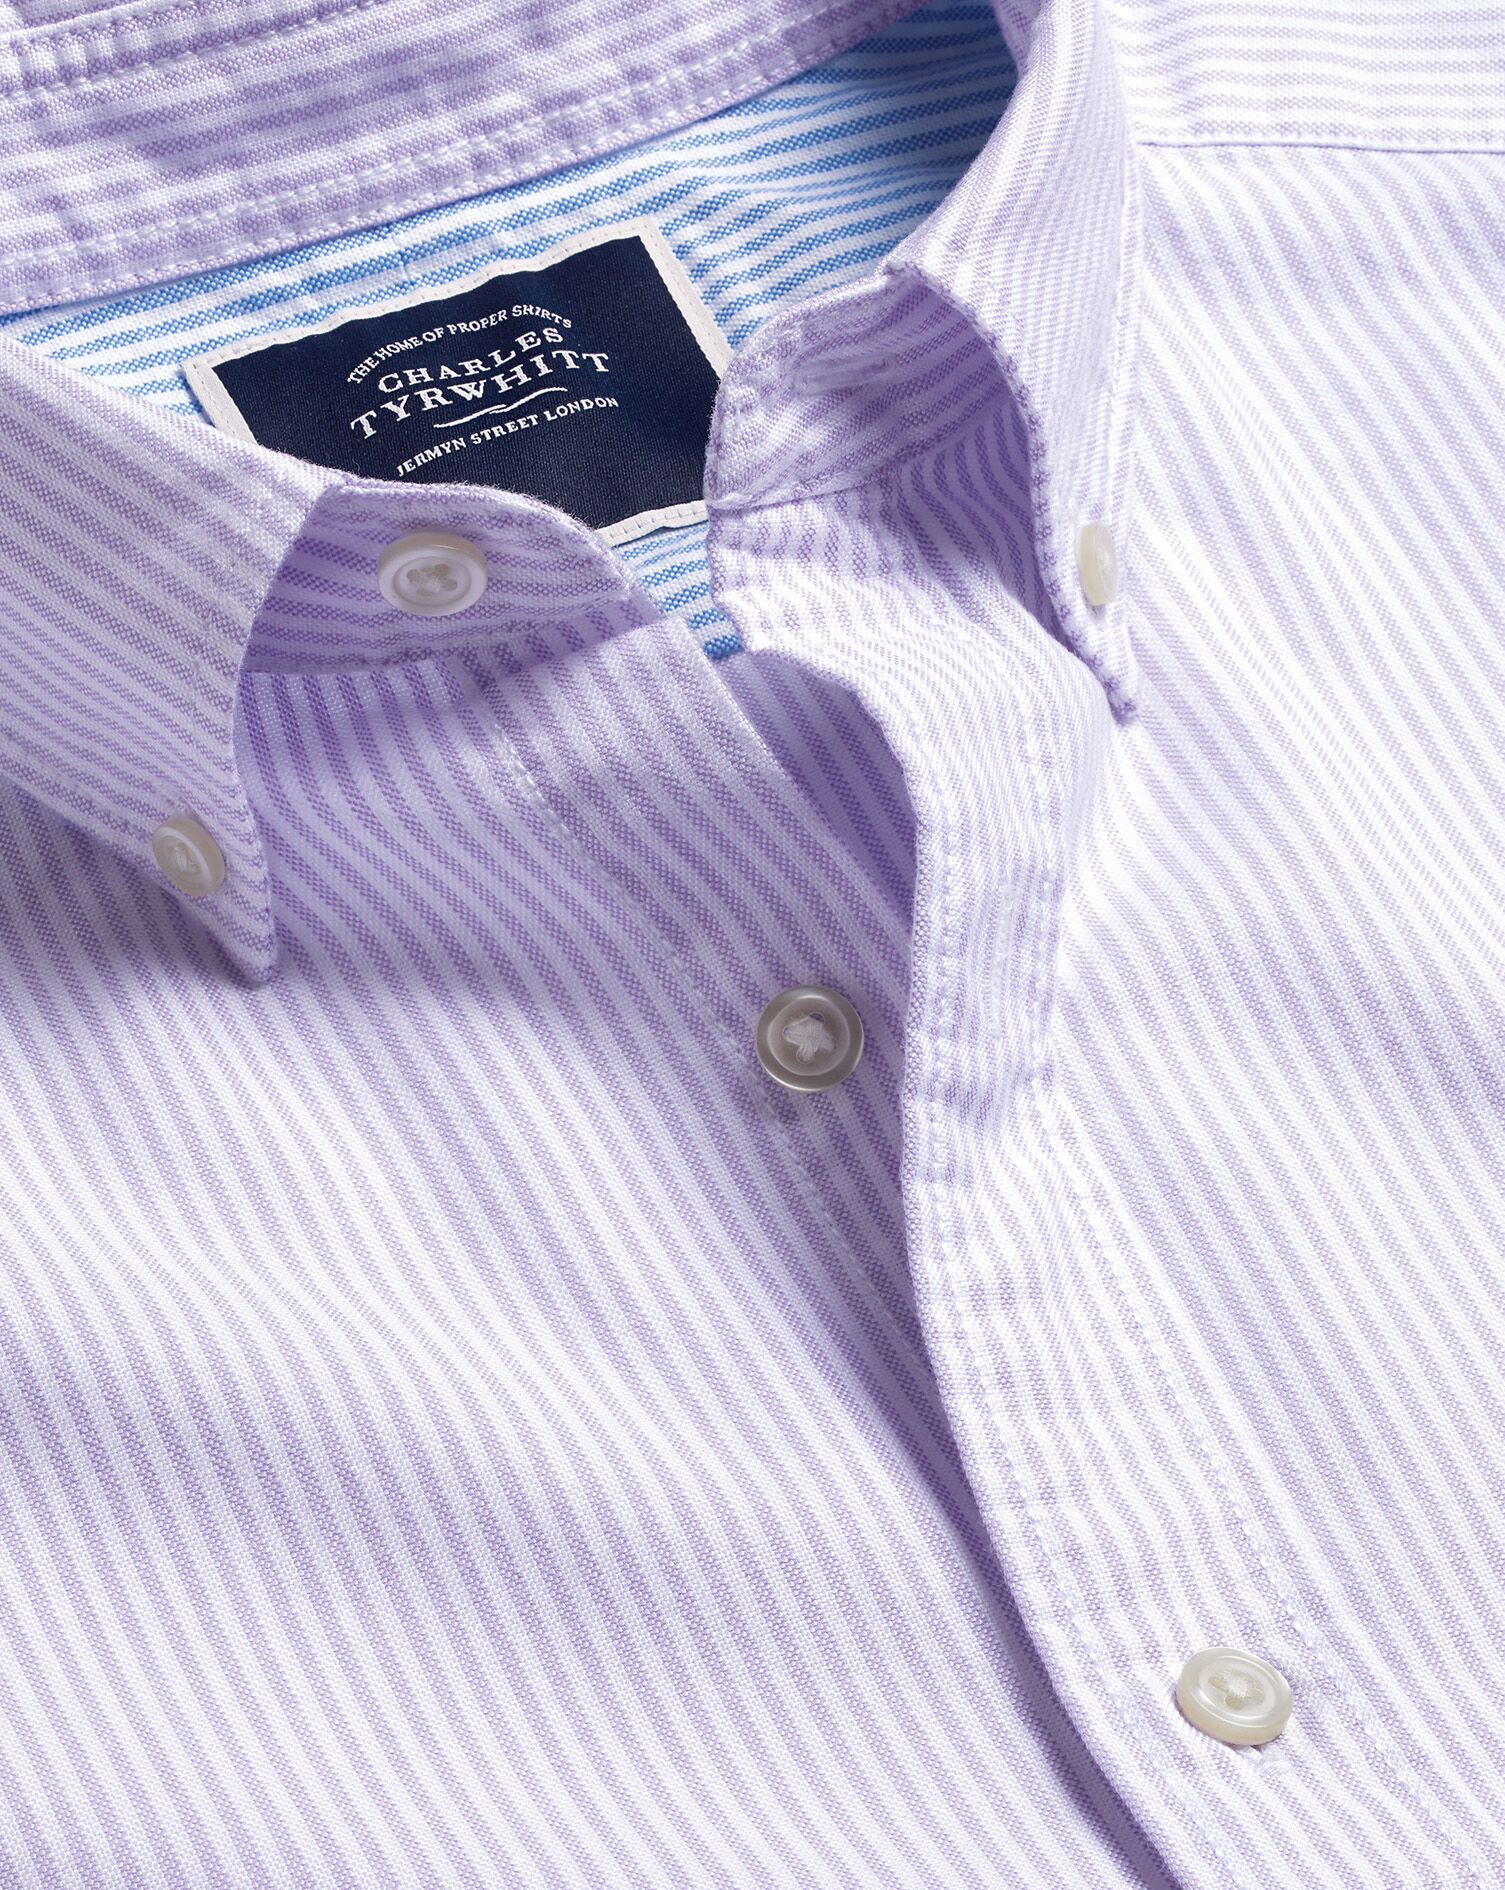 Charles Tyrwhitt Charles Tyrwhitt Purple Long Sleeve Button Up Formal Shirt Size 17" Collar #CE 